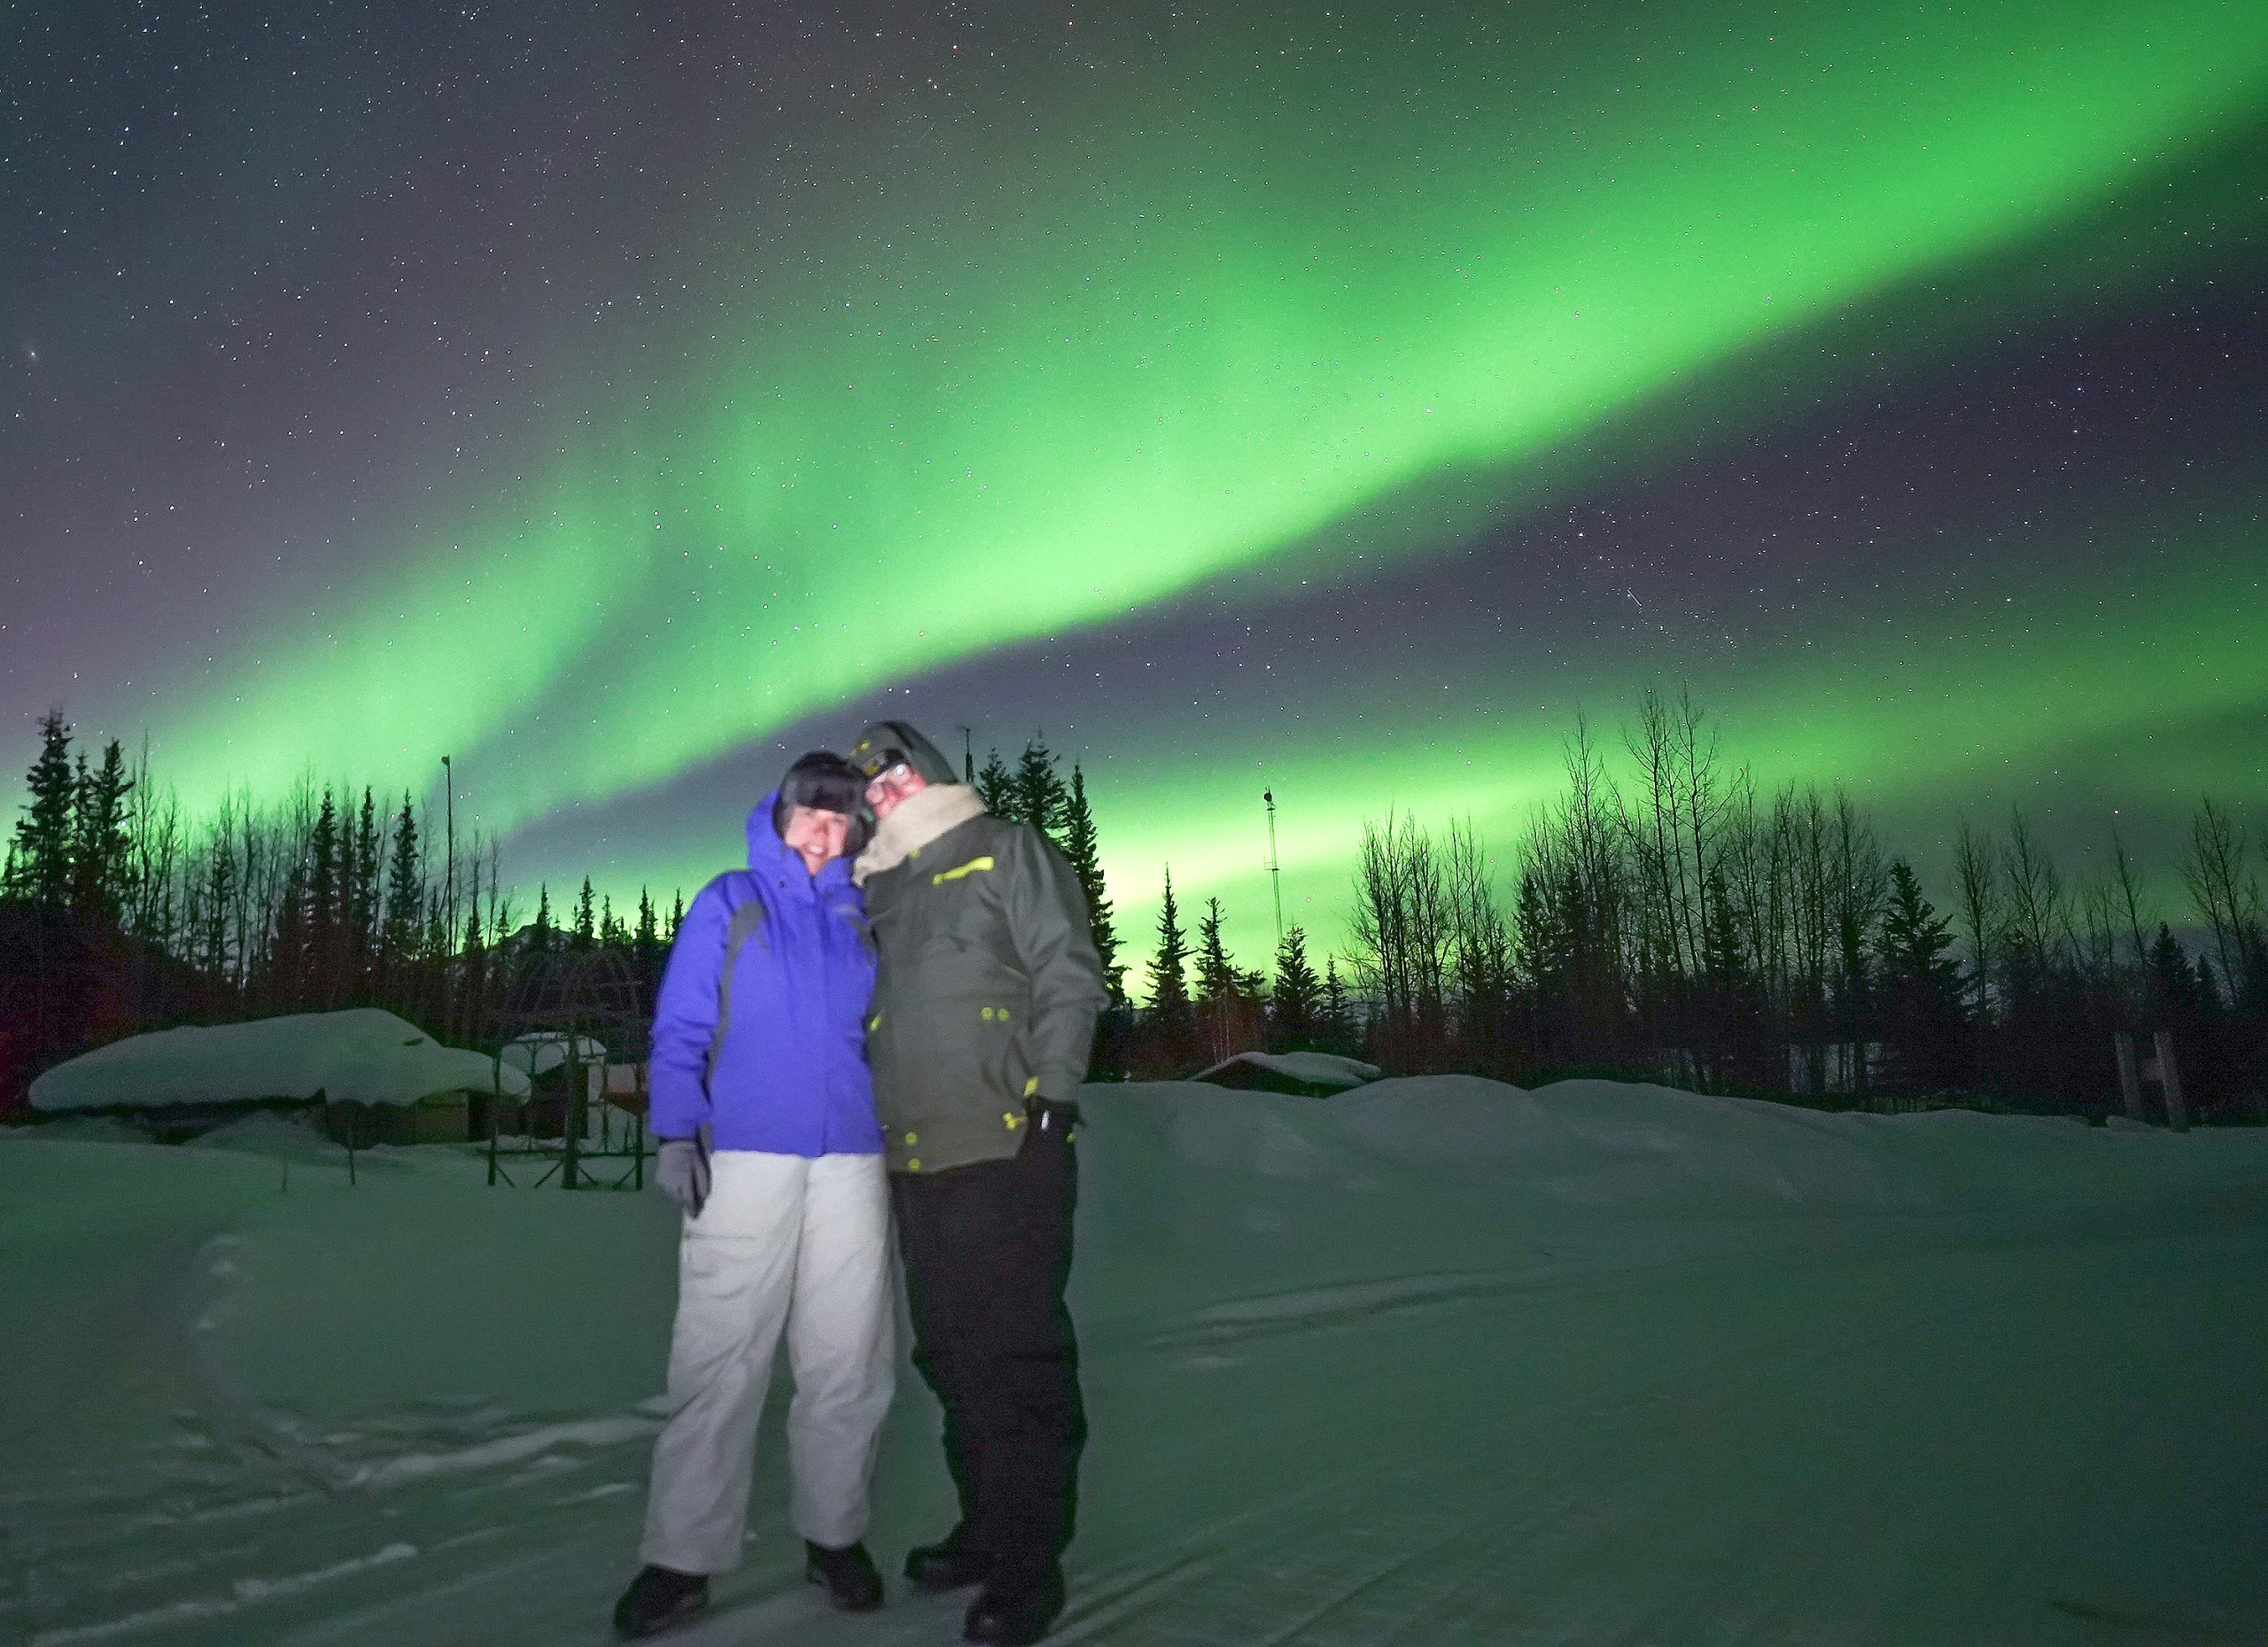 Alaska northern lights viewing in Wiseman